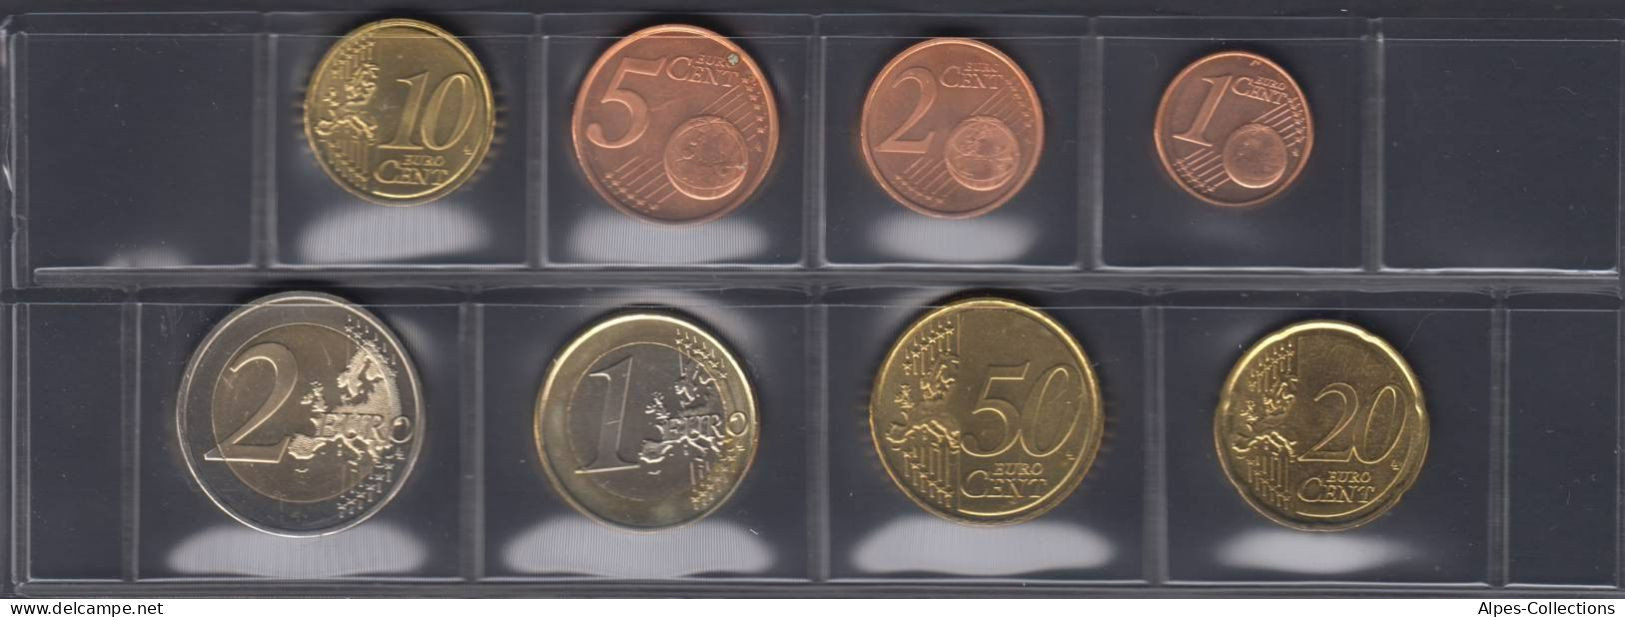 CHX2008.4 - SERIE CHYPRE - 2008 - 1 Cent à 2 Euros - Cipro